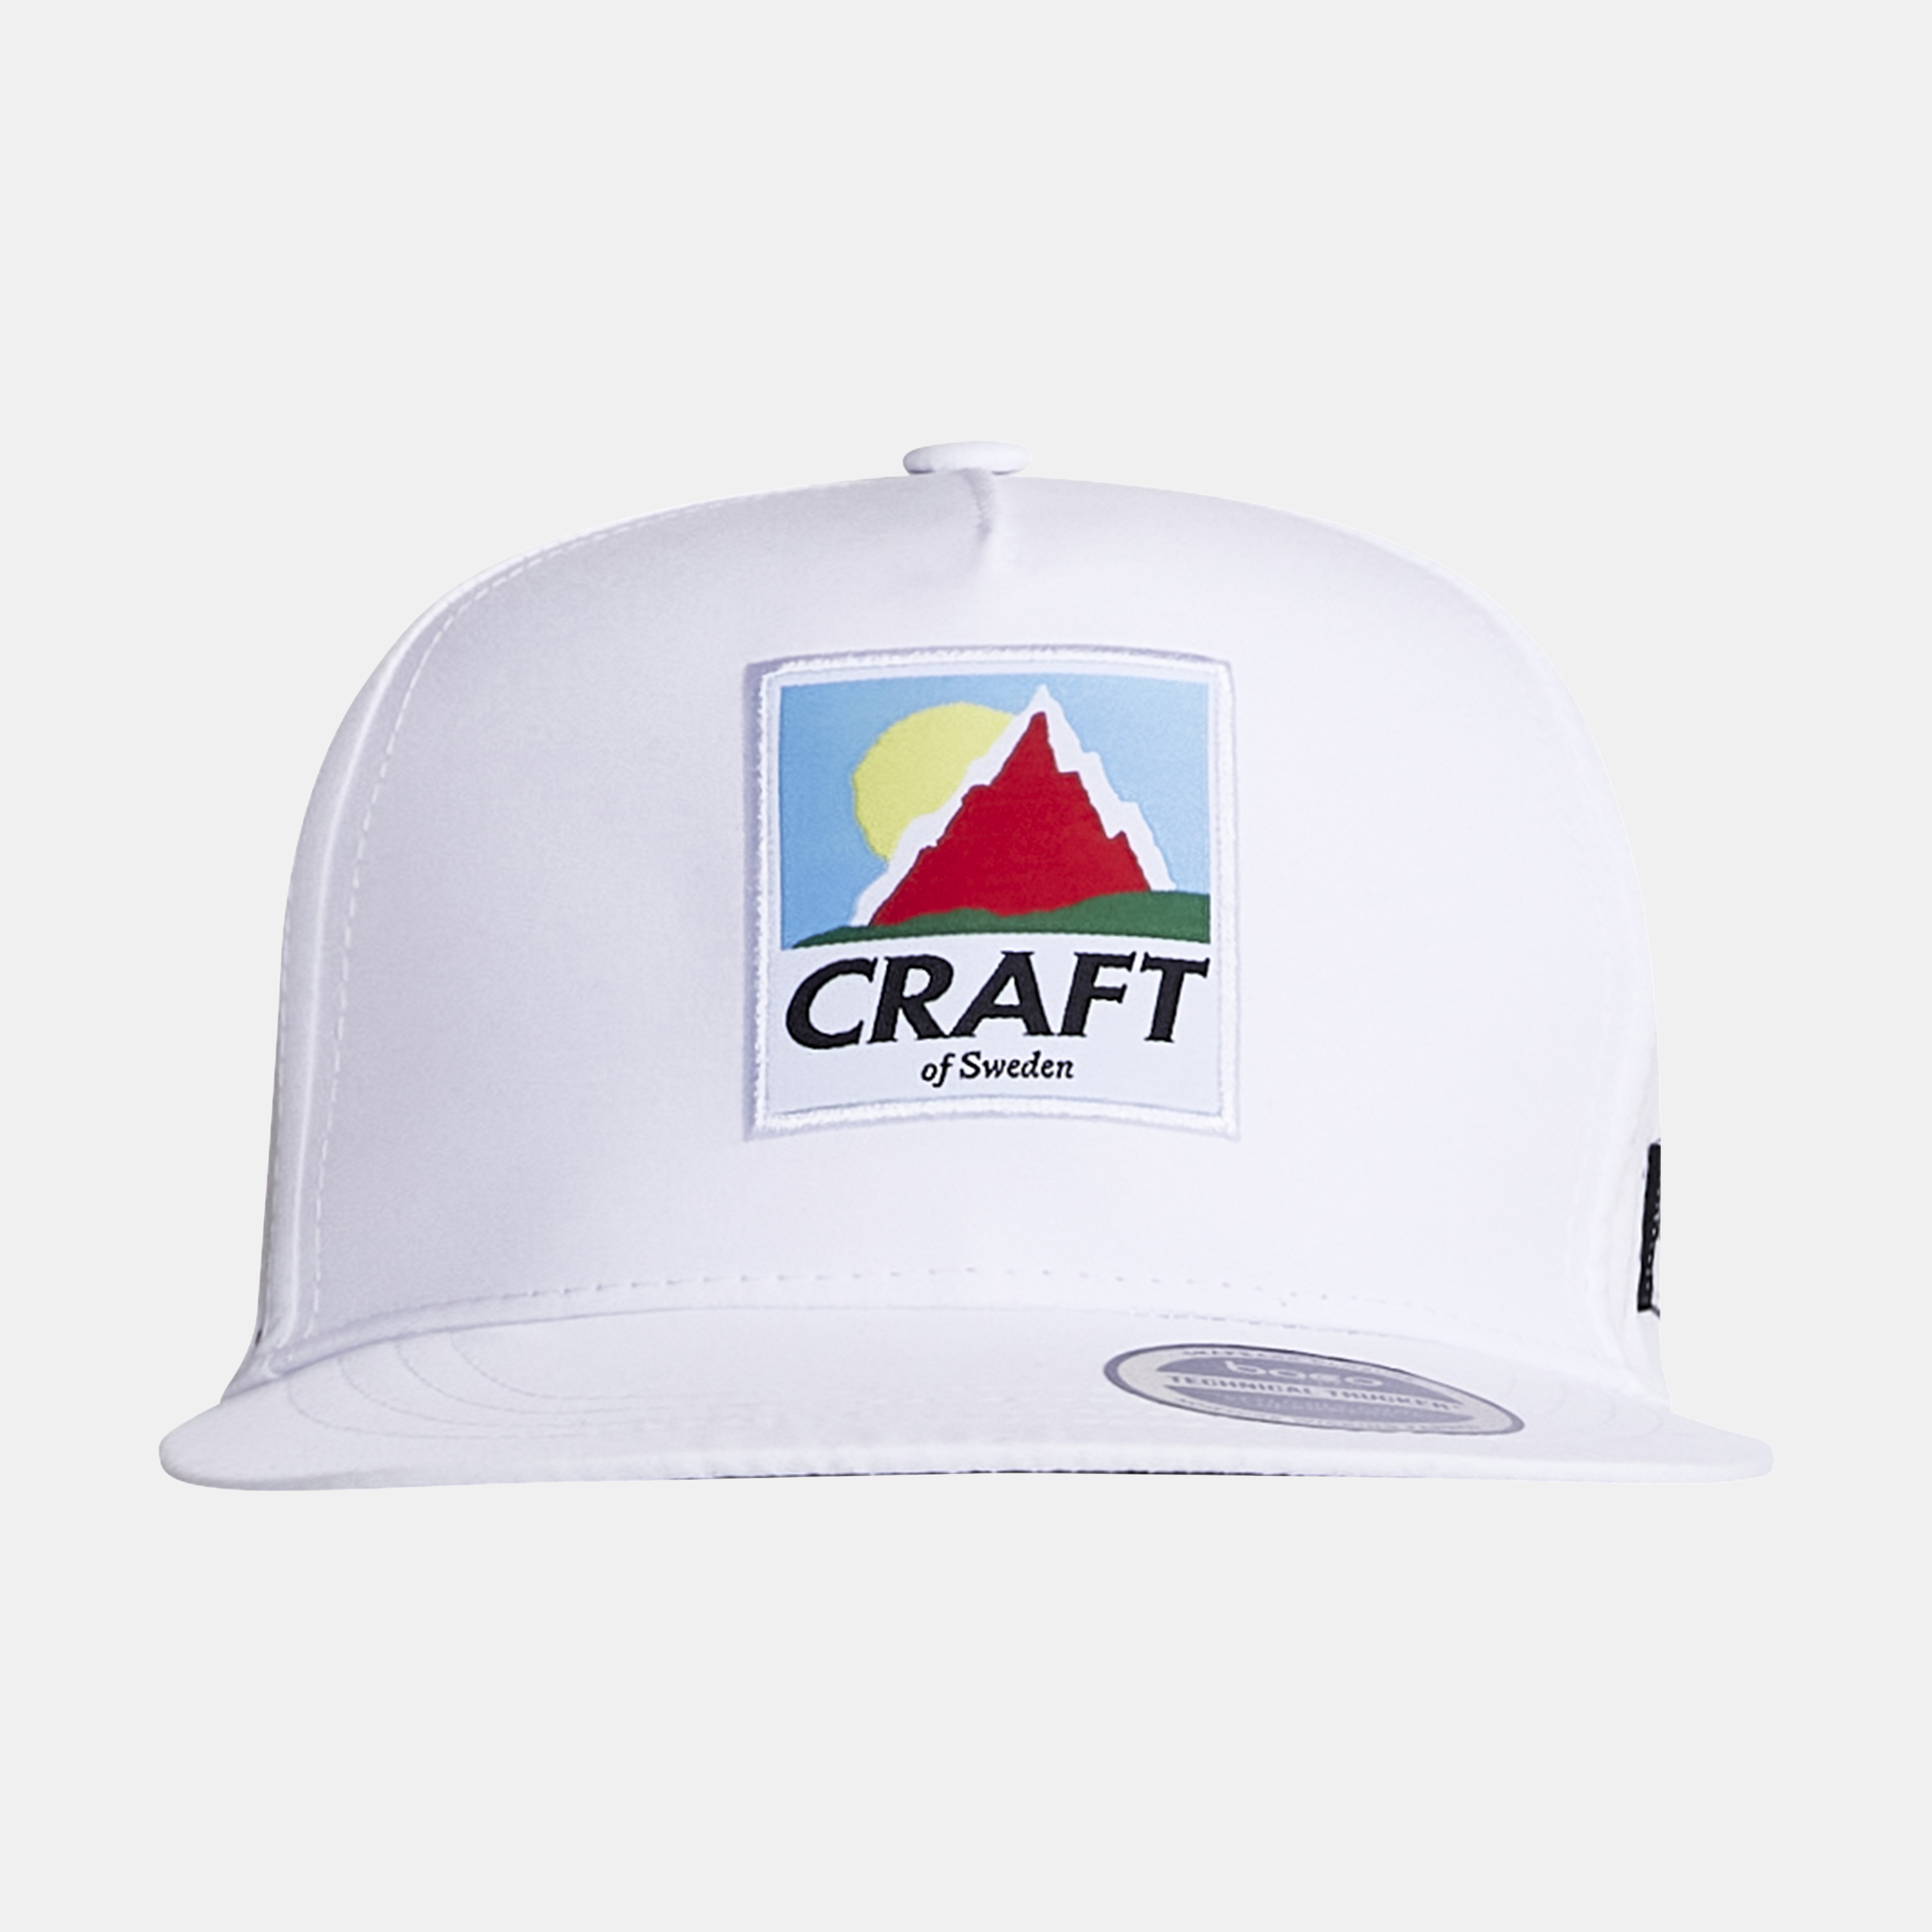 Retro Trucker Cap | Craft Sportswear